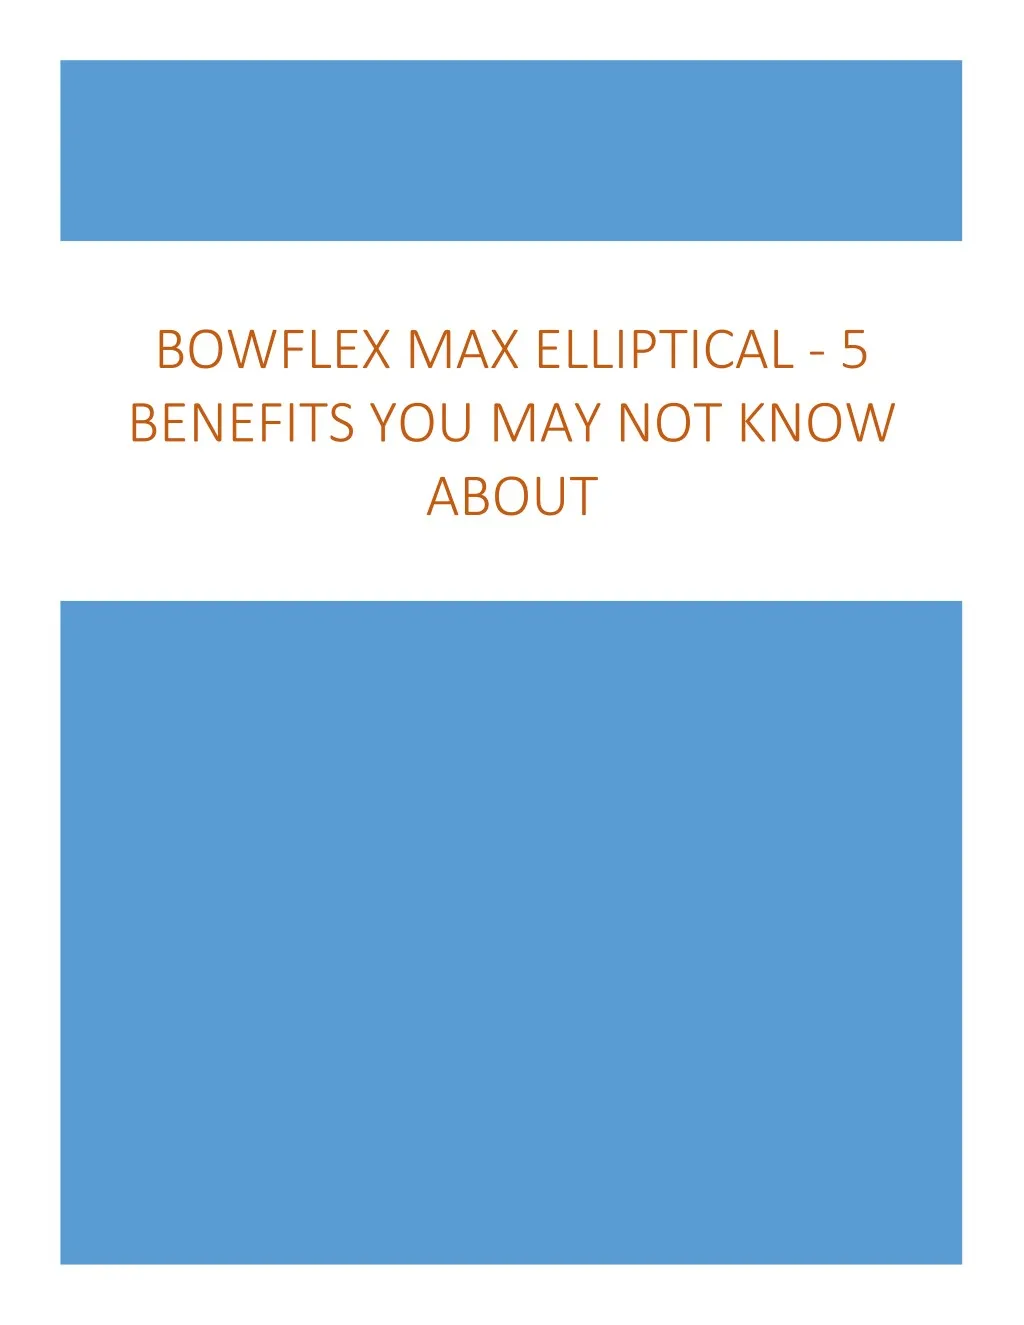 bowflex max elliptical 5 benefits